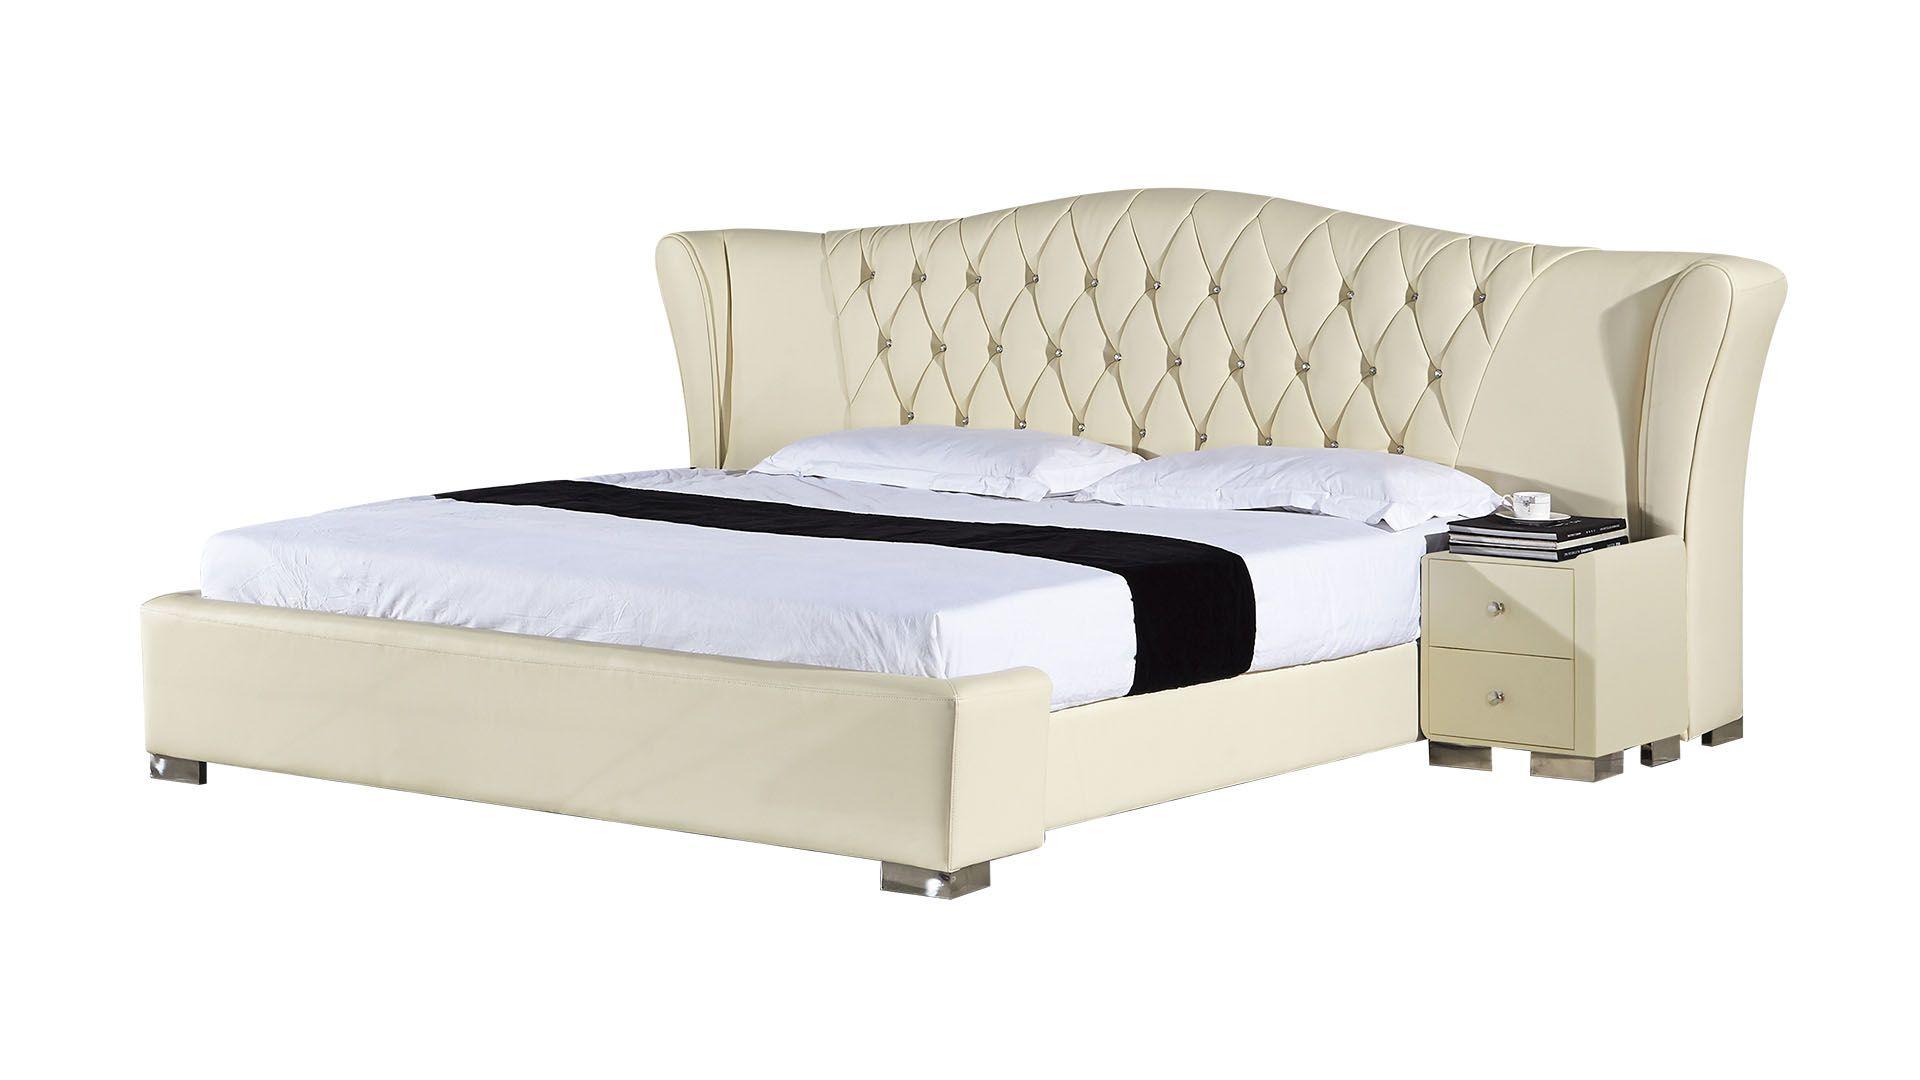 Contemporary Platform Bedroom Set B-D028-CRM B-D028-CRM-Q-3PC in Cream PU